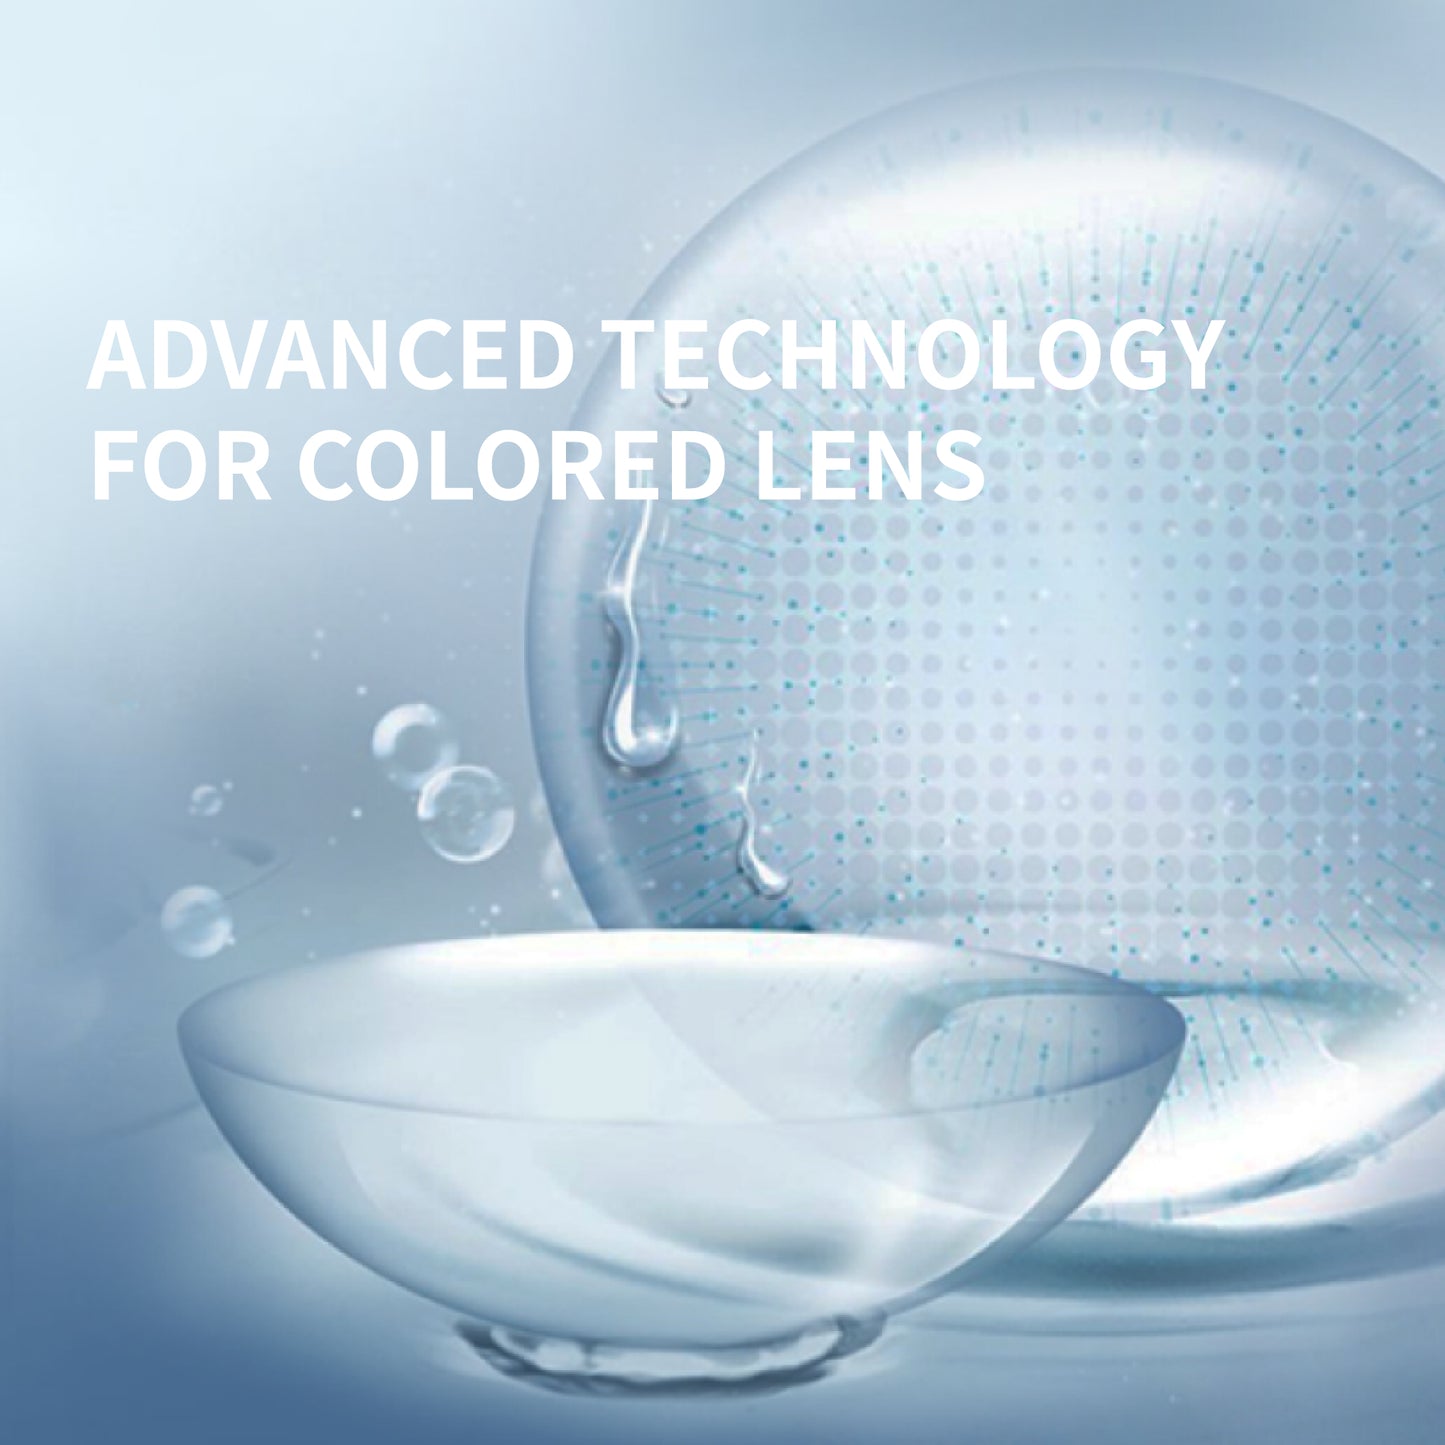 1Pcs FDA Certificate Eyes Colorful Contact Lenses - Lolita light brown